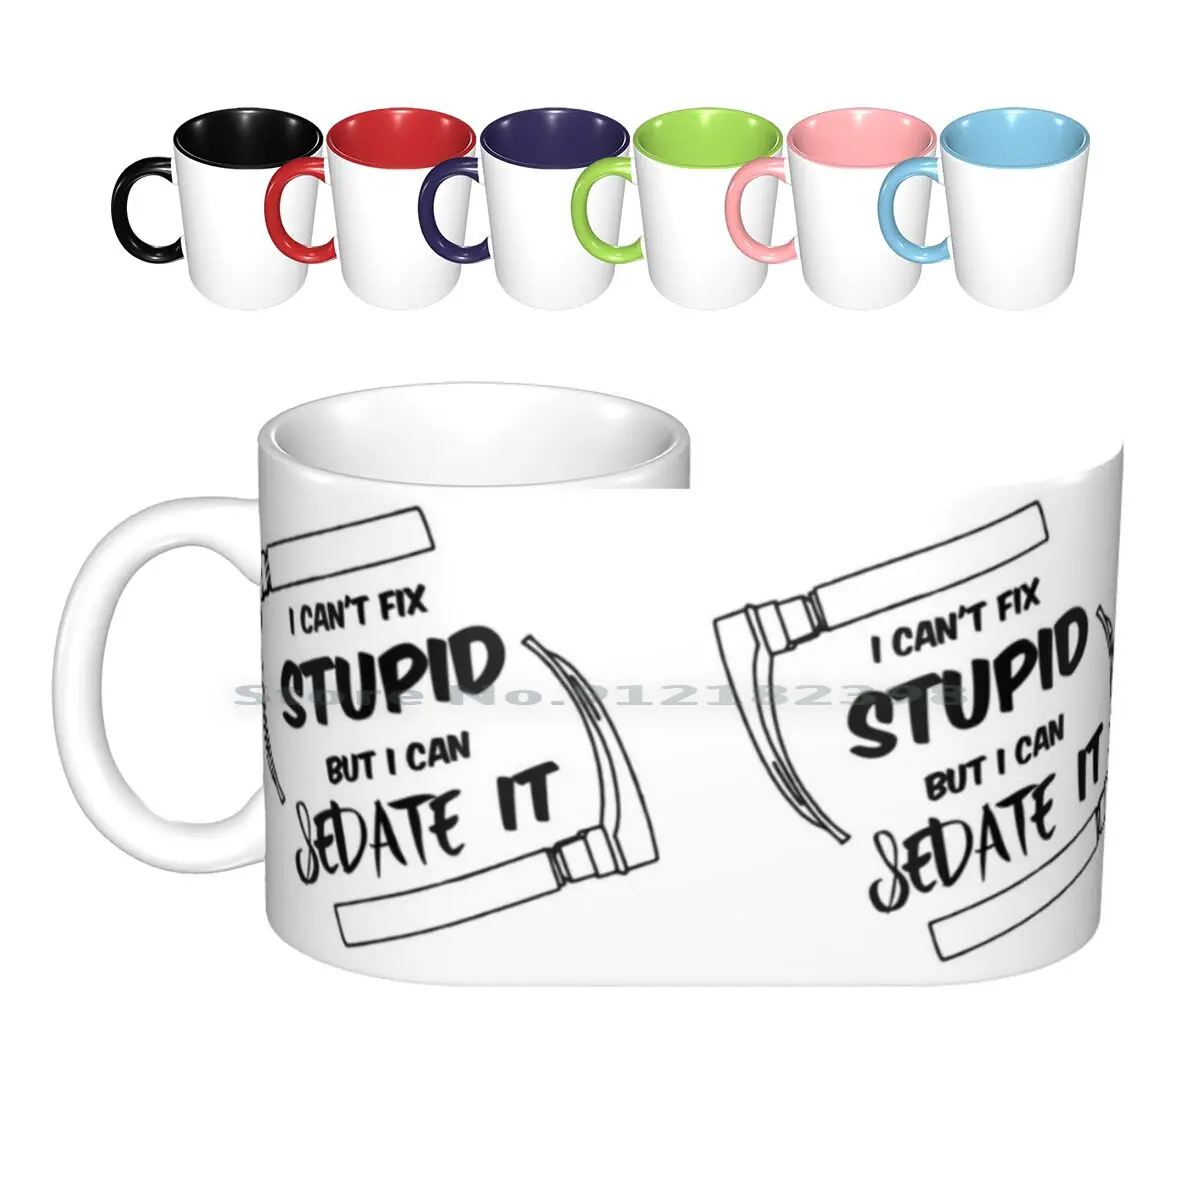 

I Cant Fix Stupid But I Can Sedate It Ceramic Mugs Coffee Cups Milk Tea Mug Anaesthetist Anesthetist Anesthesiologist